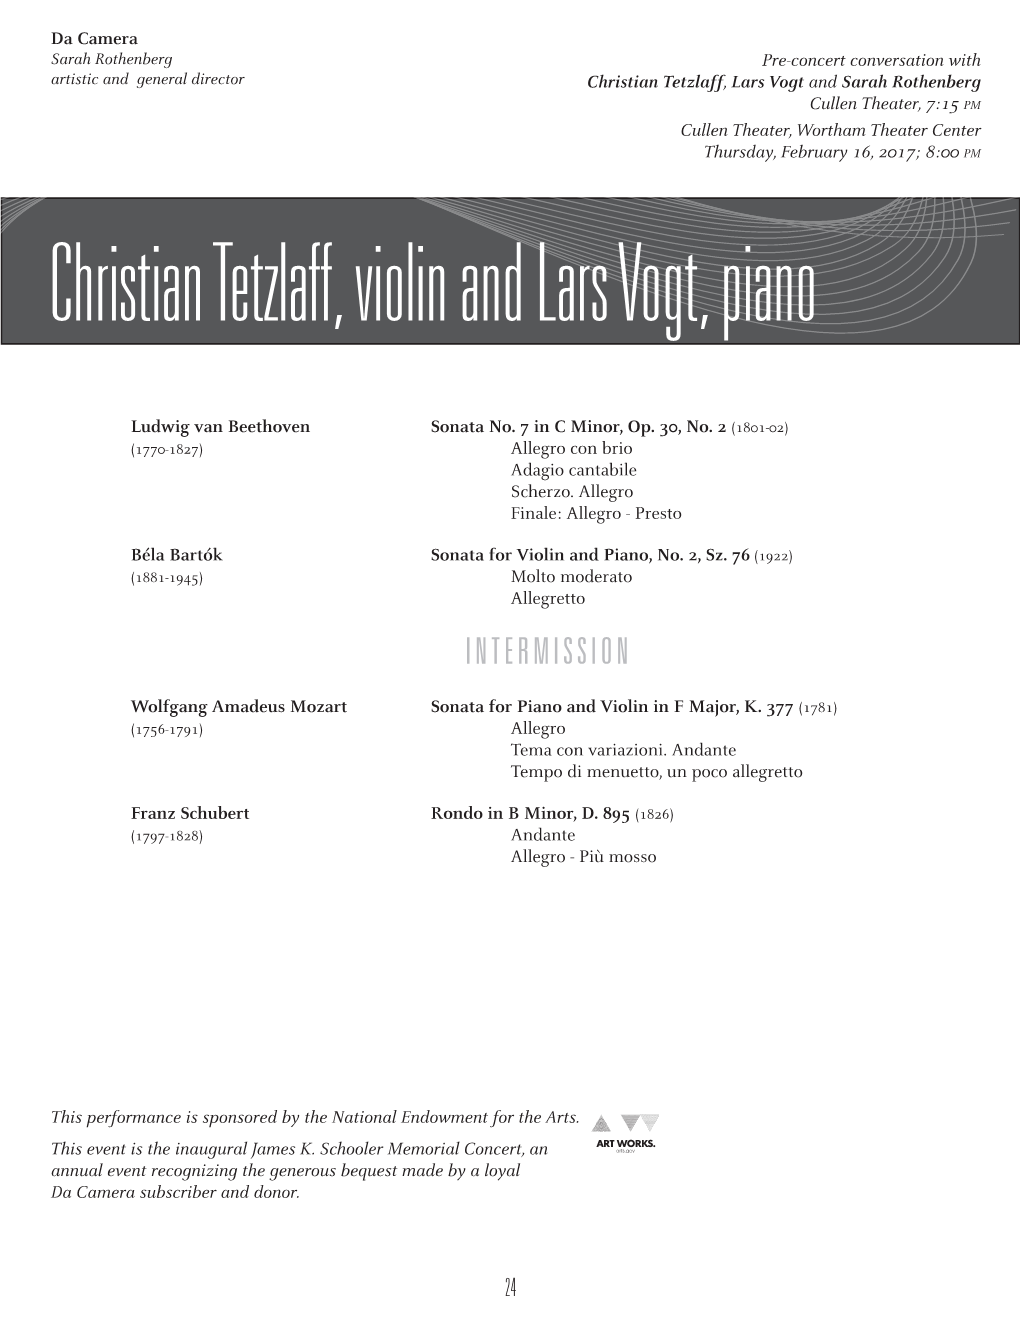 Christian Tetzlaff, Violin and Lars Vogt, Piano